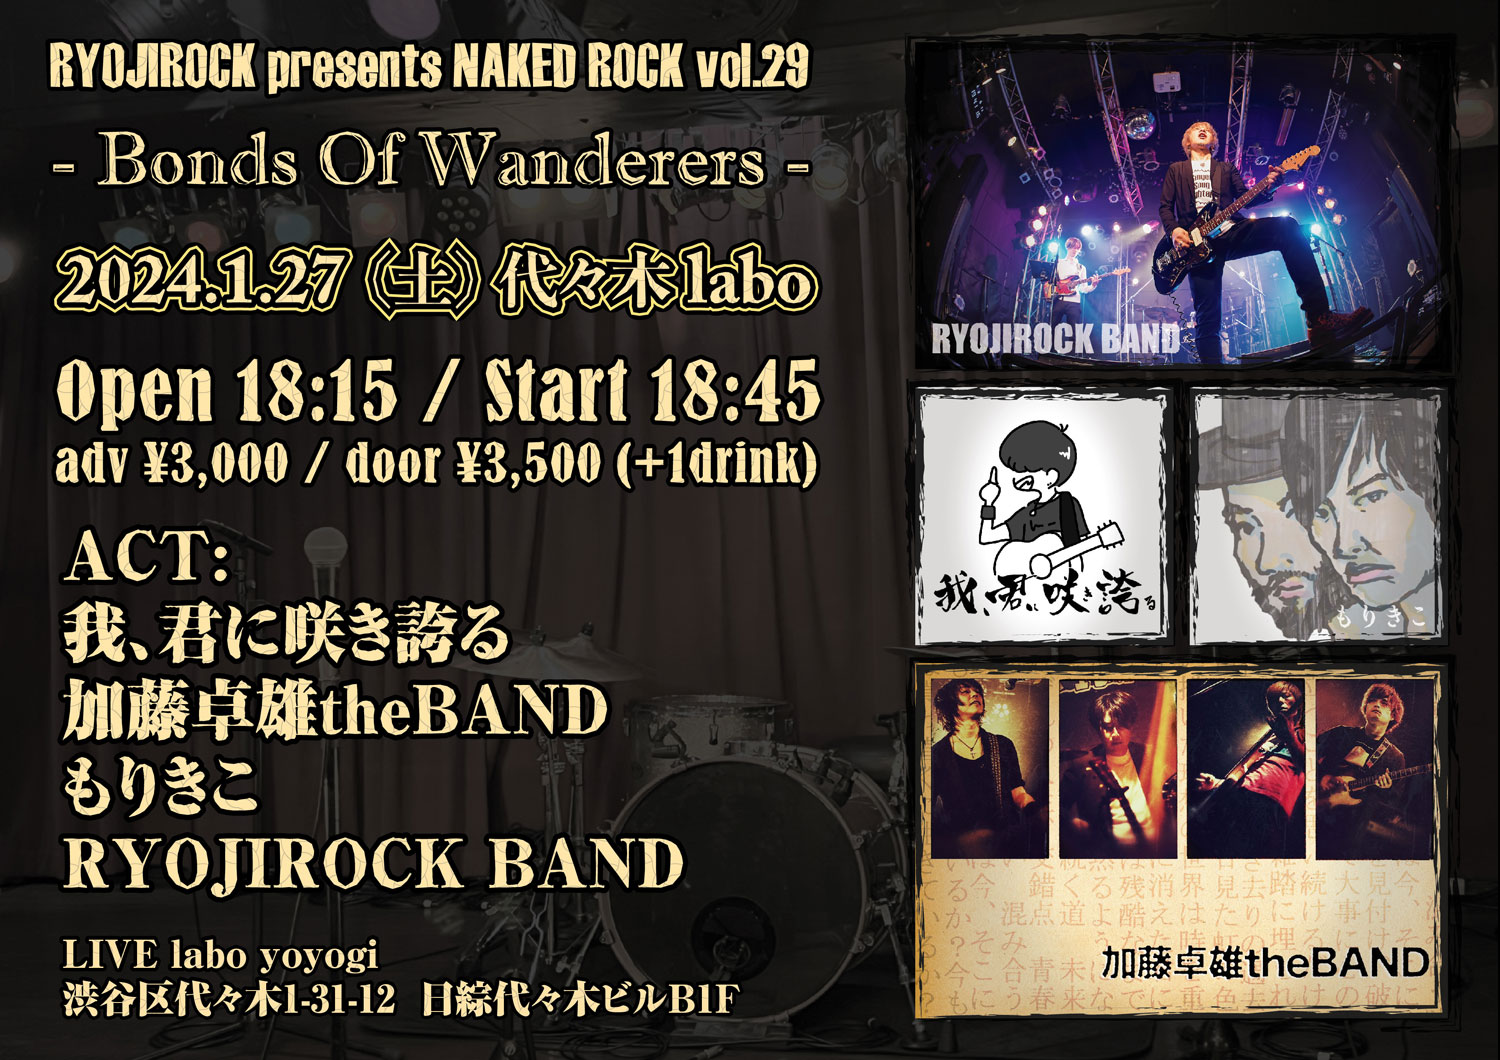 RYOJIROCK presents NAKED ROCK vol.29
-Bonds Of Wanderers-